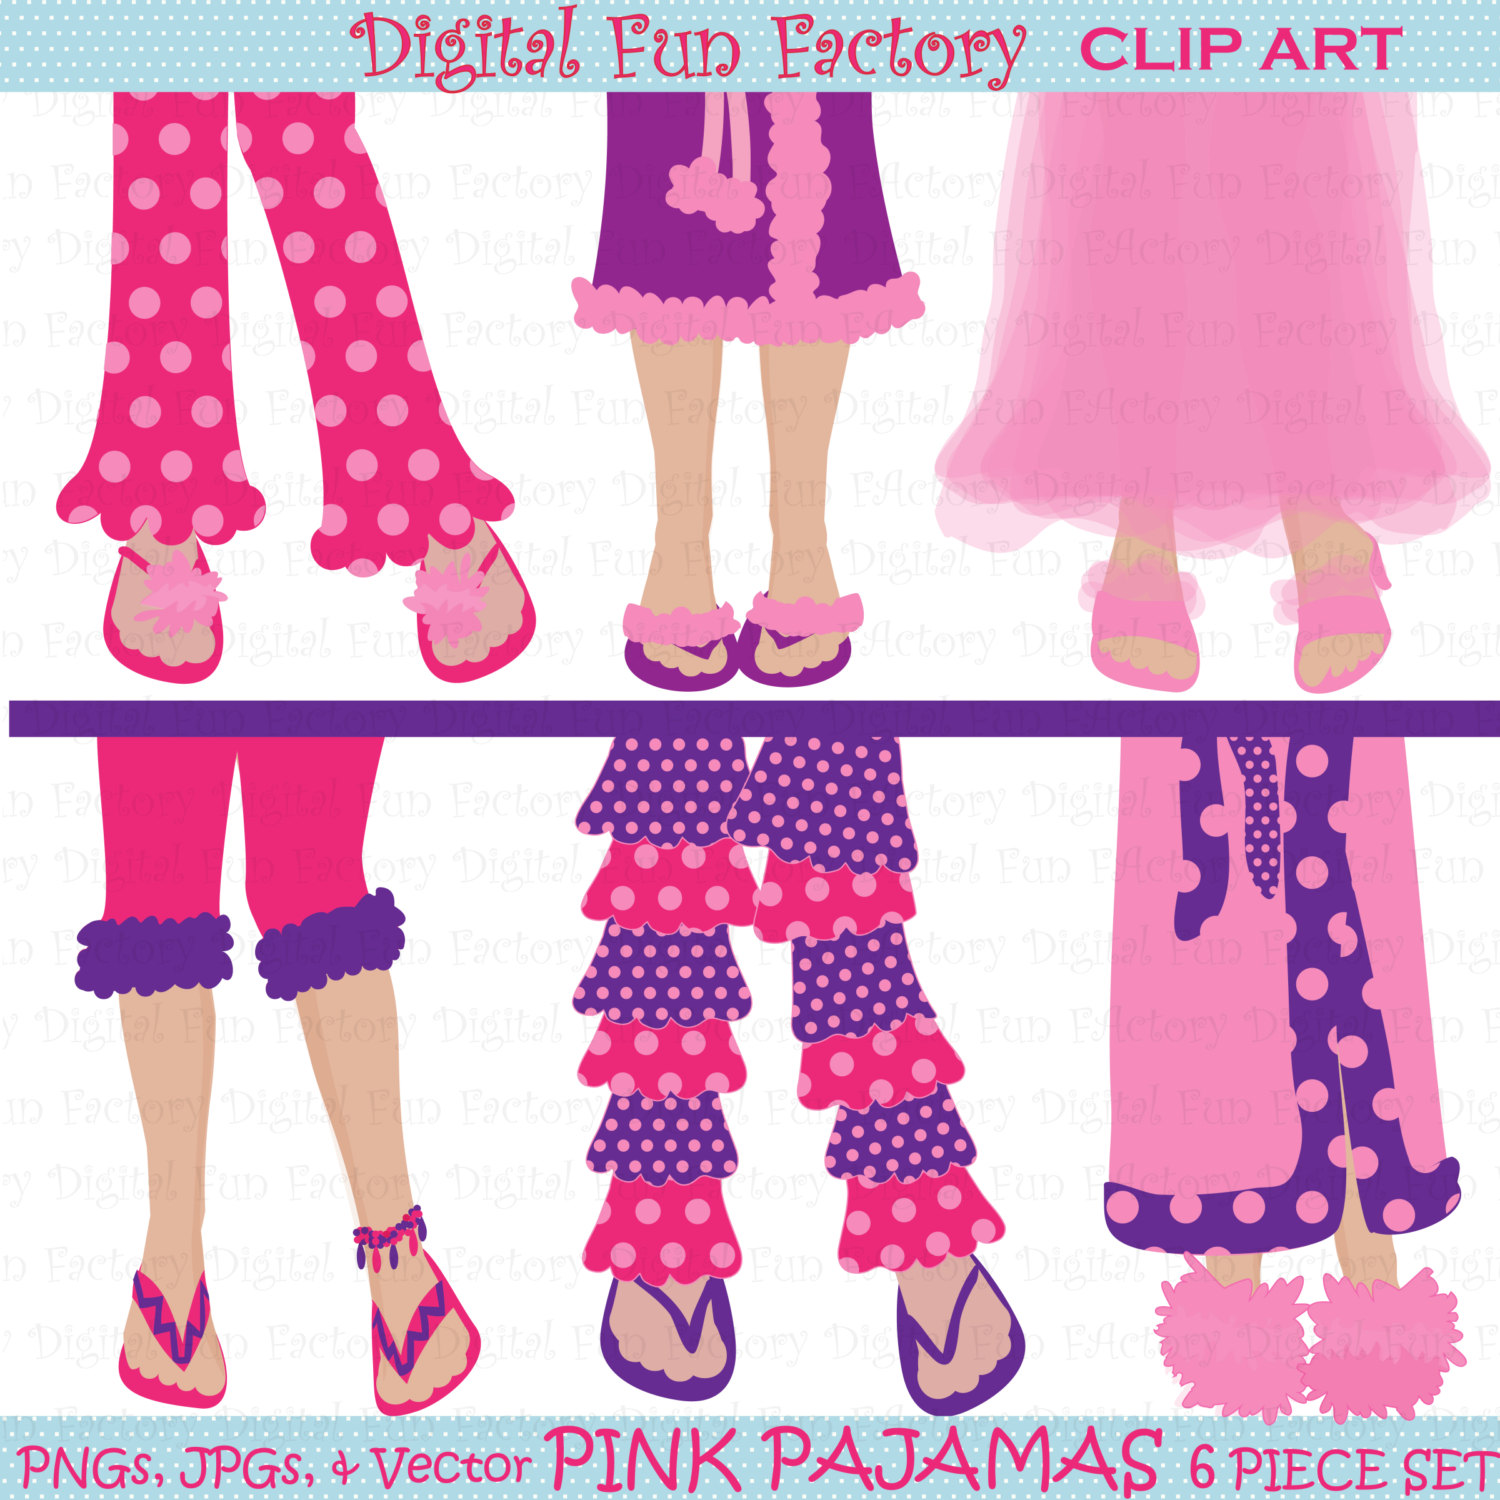 Piece Pink Pajama Legs Shoe Clip Art Set By Digitalfunfactory